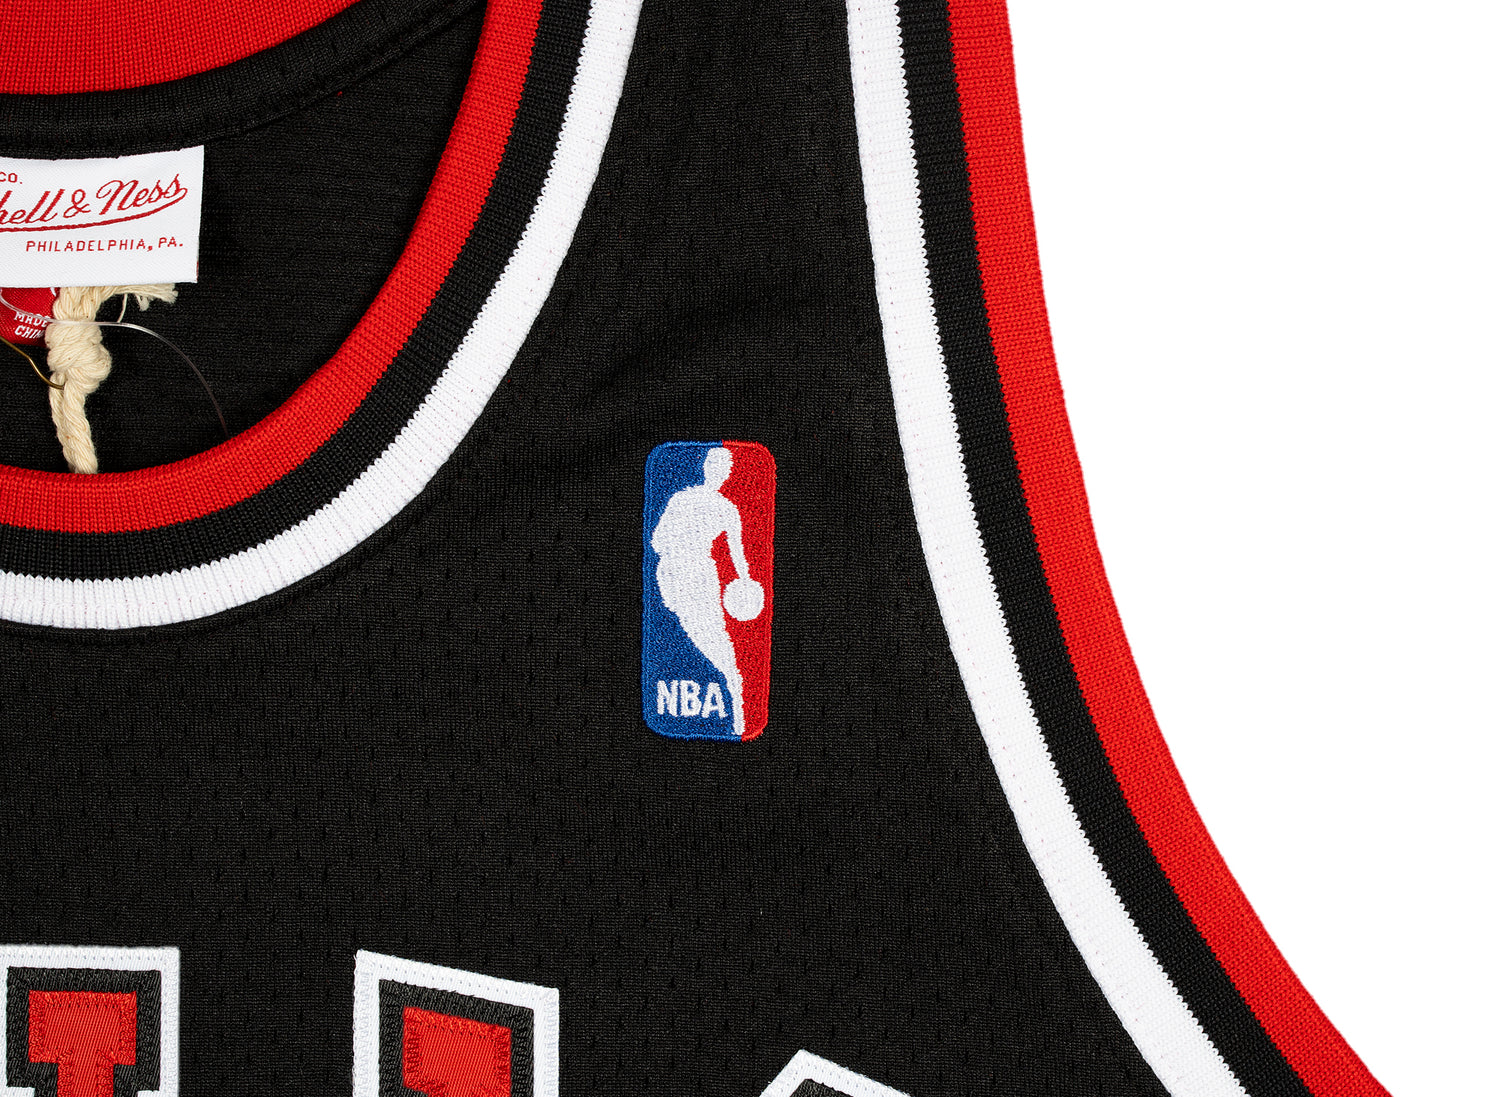 Chicago Bulls Michael Jordan 1997 Alternate Authentic Jersey By